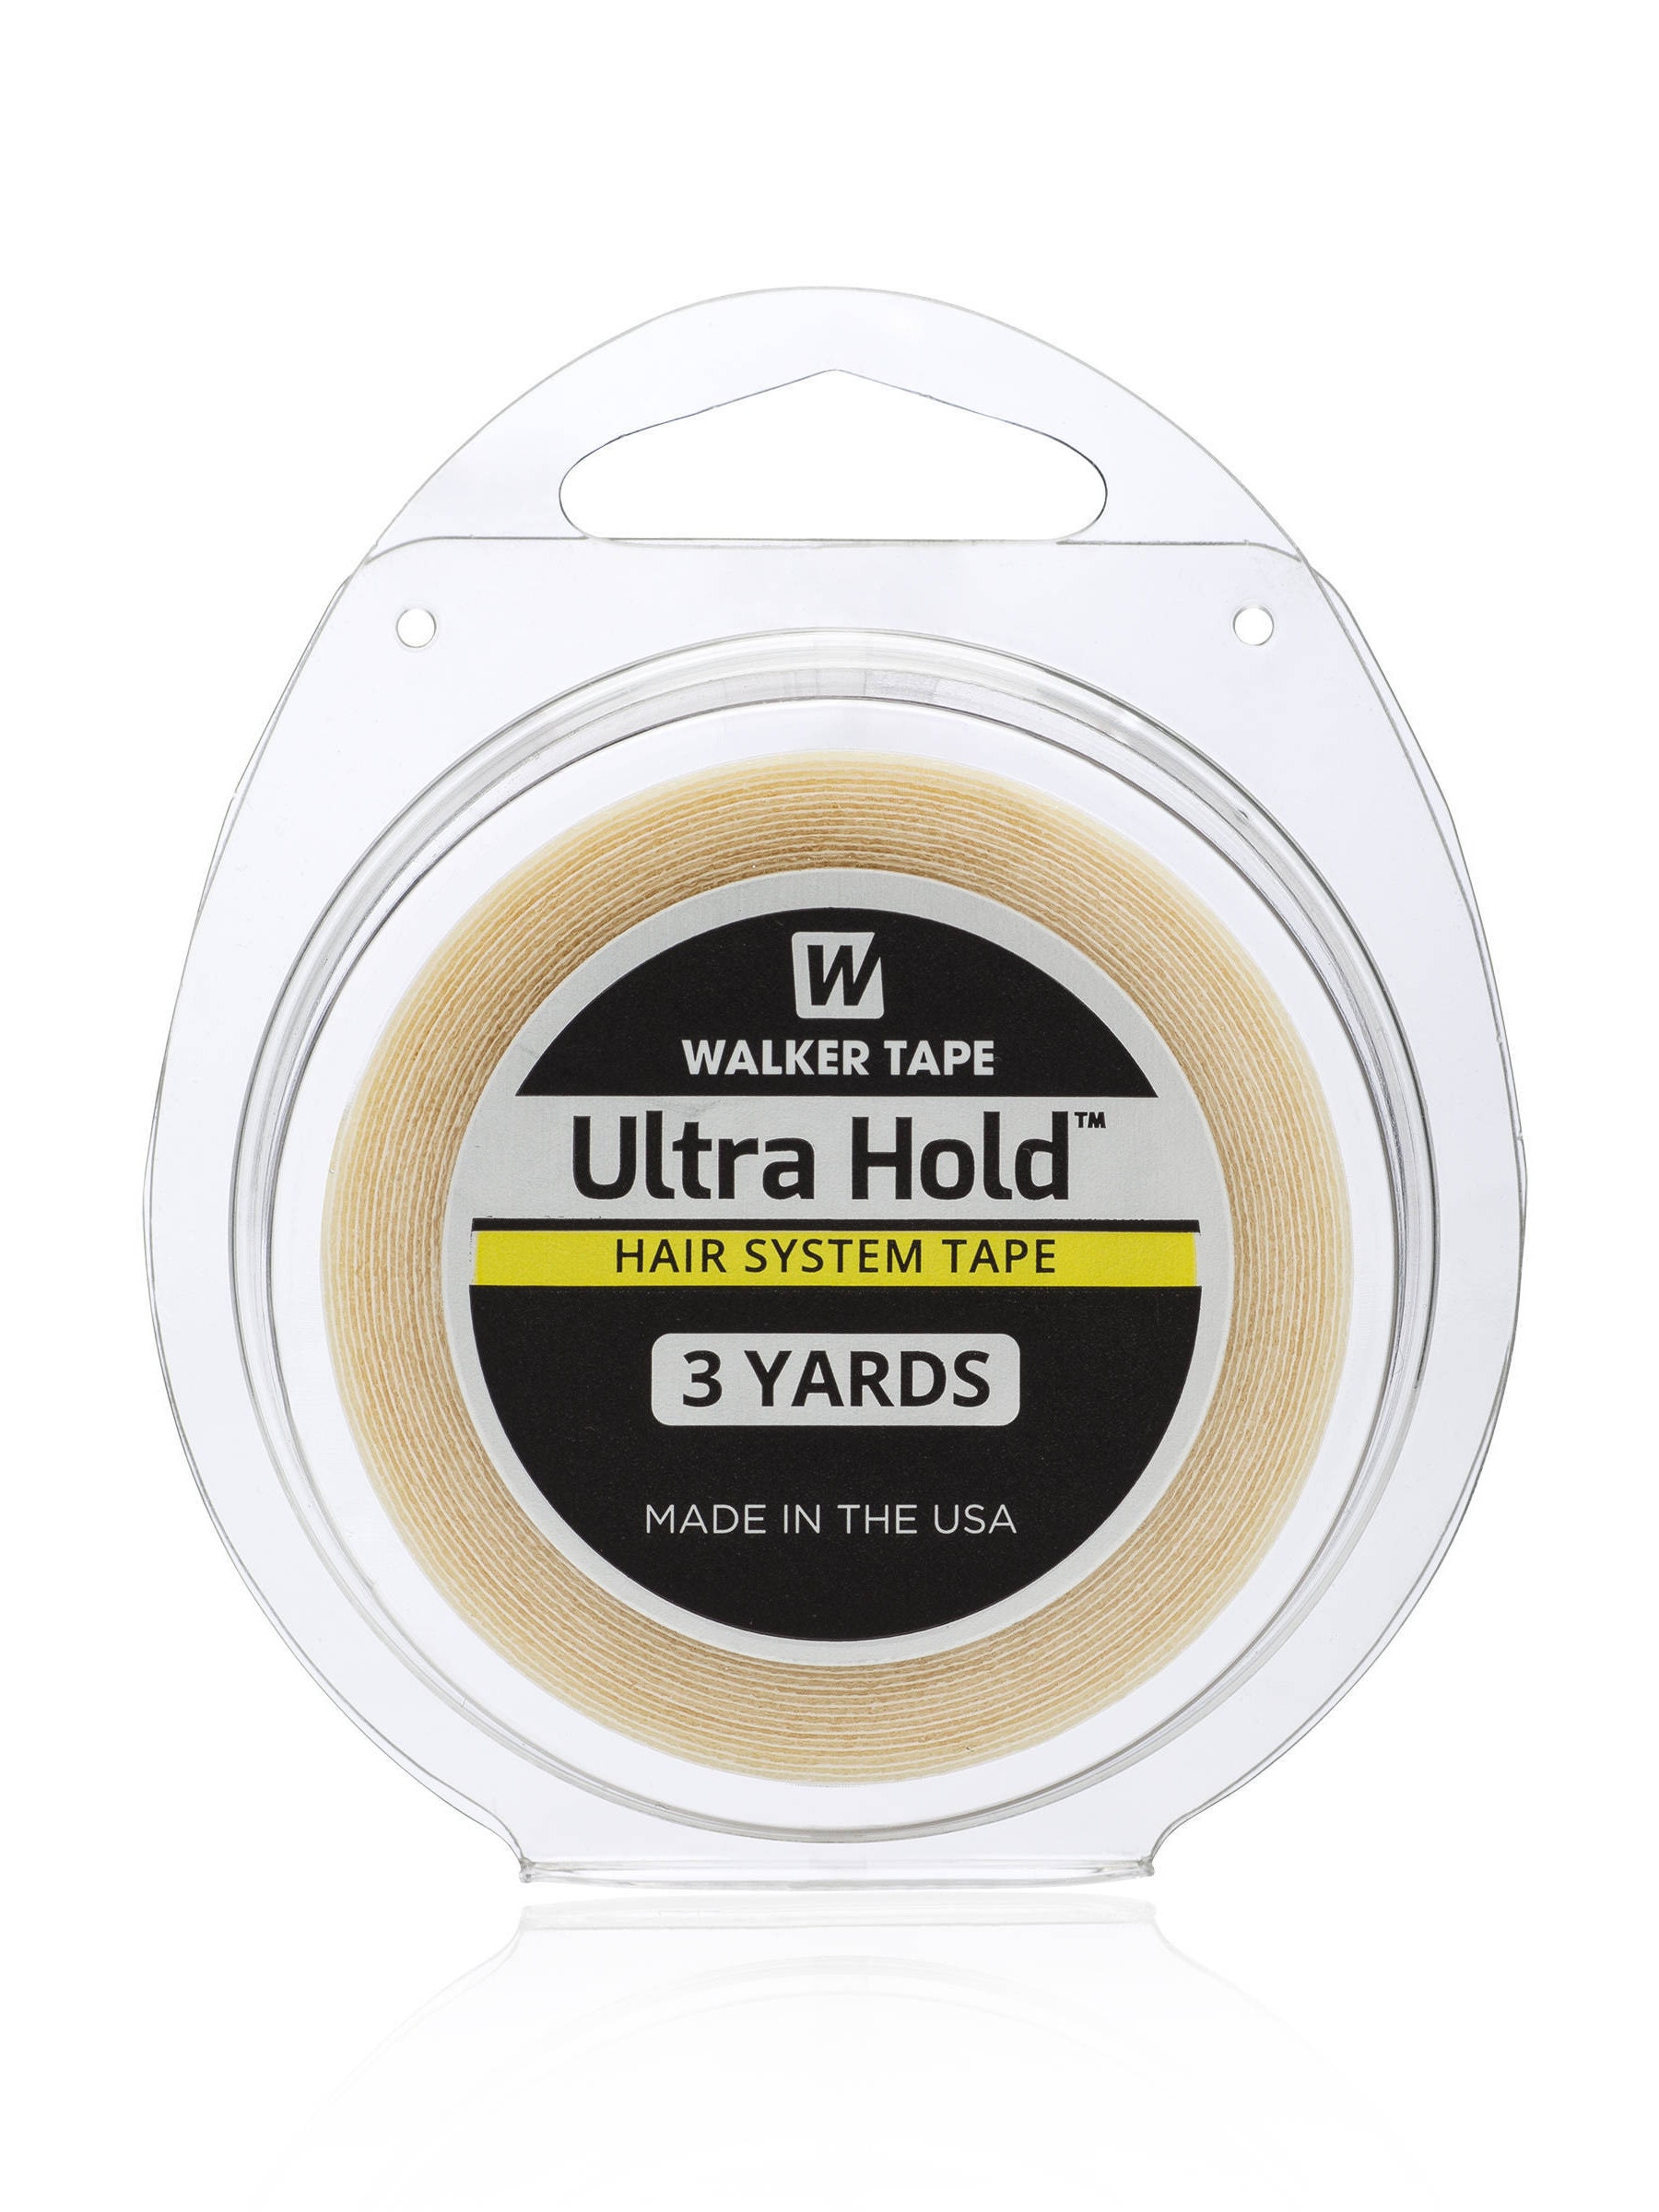 Heat N' Bond Ultra Hold Iron-on Adhesive 17in X 1yd 3502 